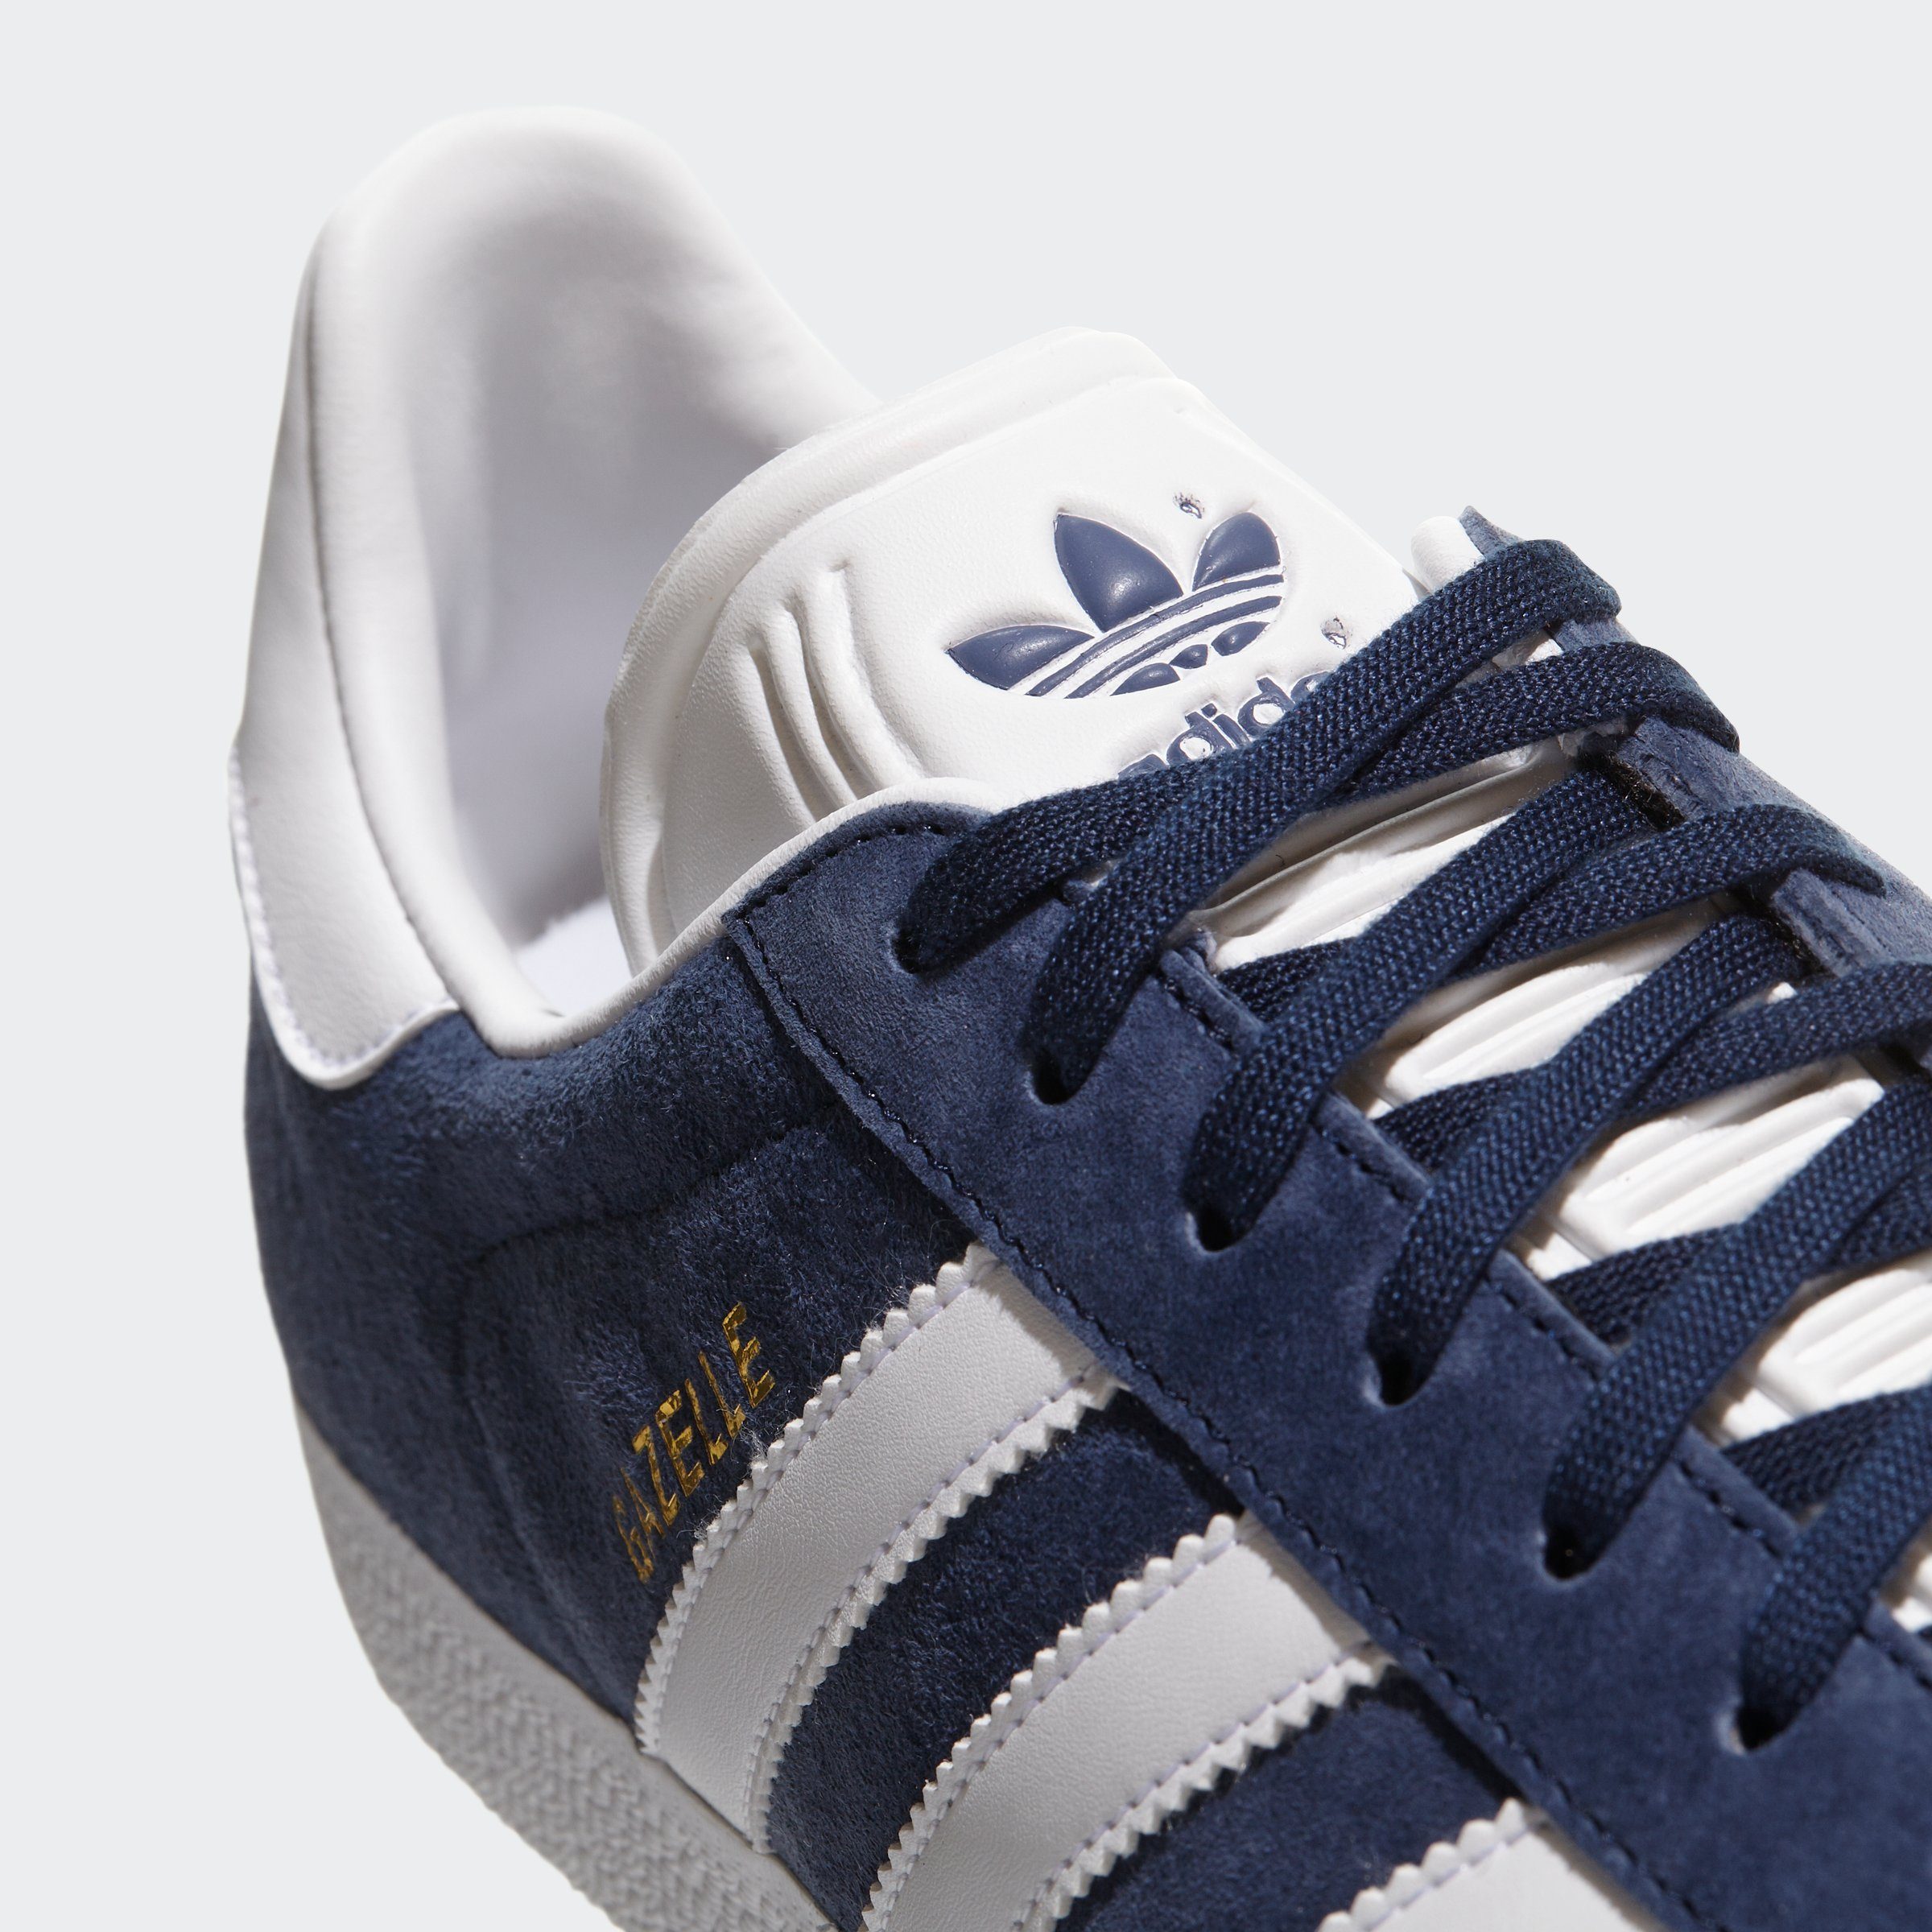 CONAVY-WHITE-GOLDMT Originals Sneaker GAZELLE adidas